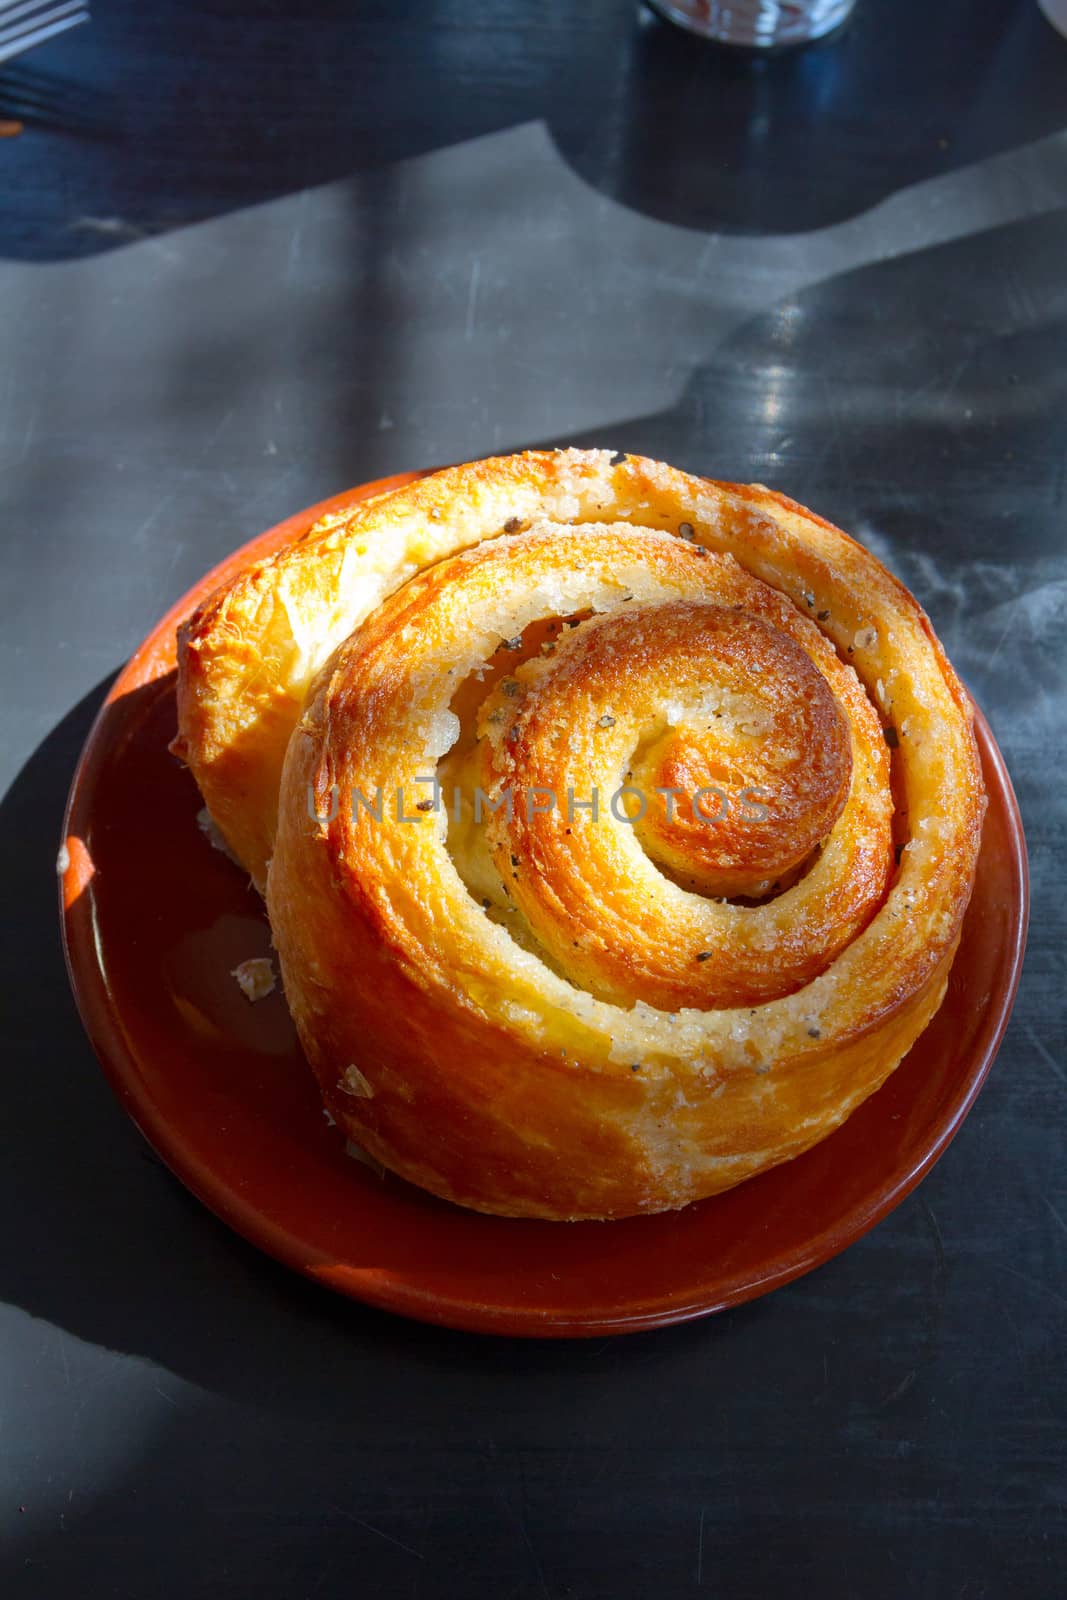 A morning bun cinnamon roll on a plate at a cafe restaurant.